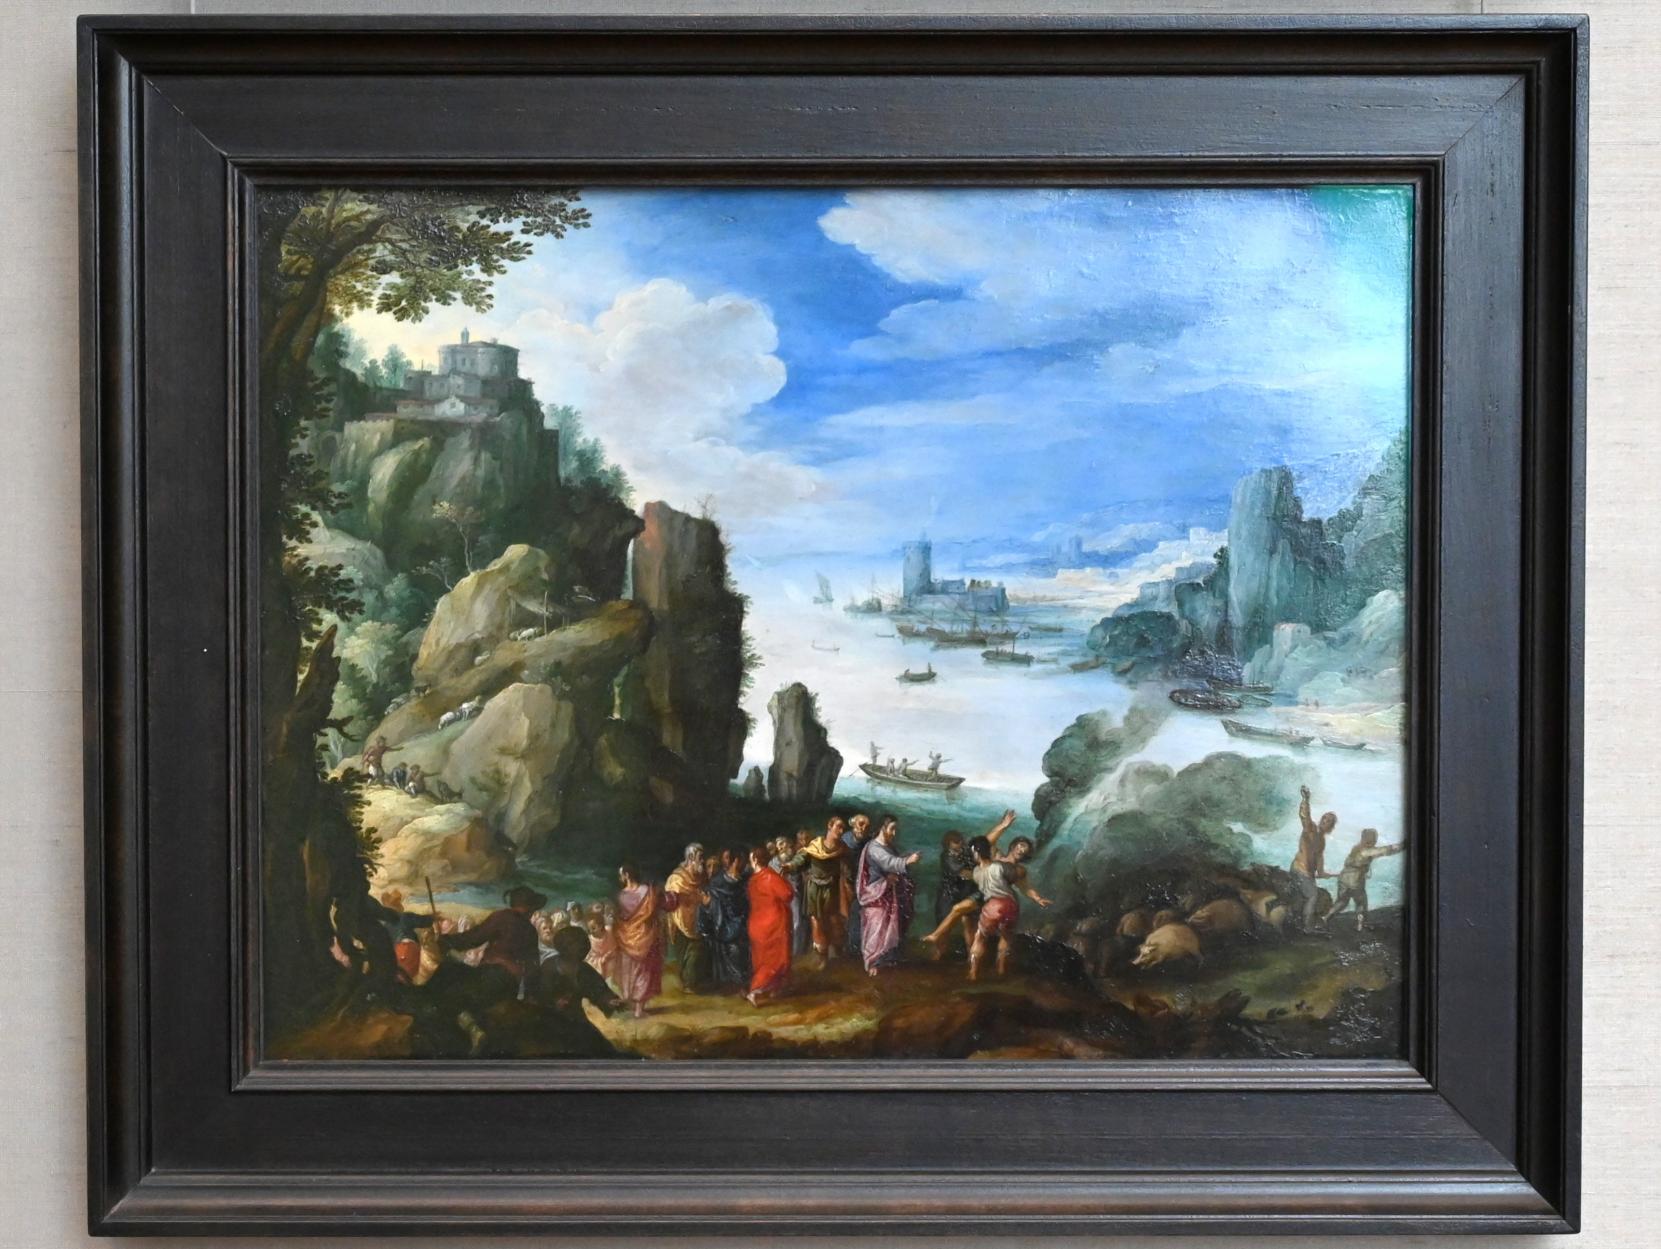 Paul Bril (1592–1624), Felsige Landschaft mit der Heilung des Besessenen, München, Alte Pinakothek, Obergeschoss Kabinett 9, 1601